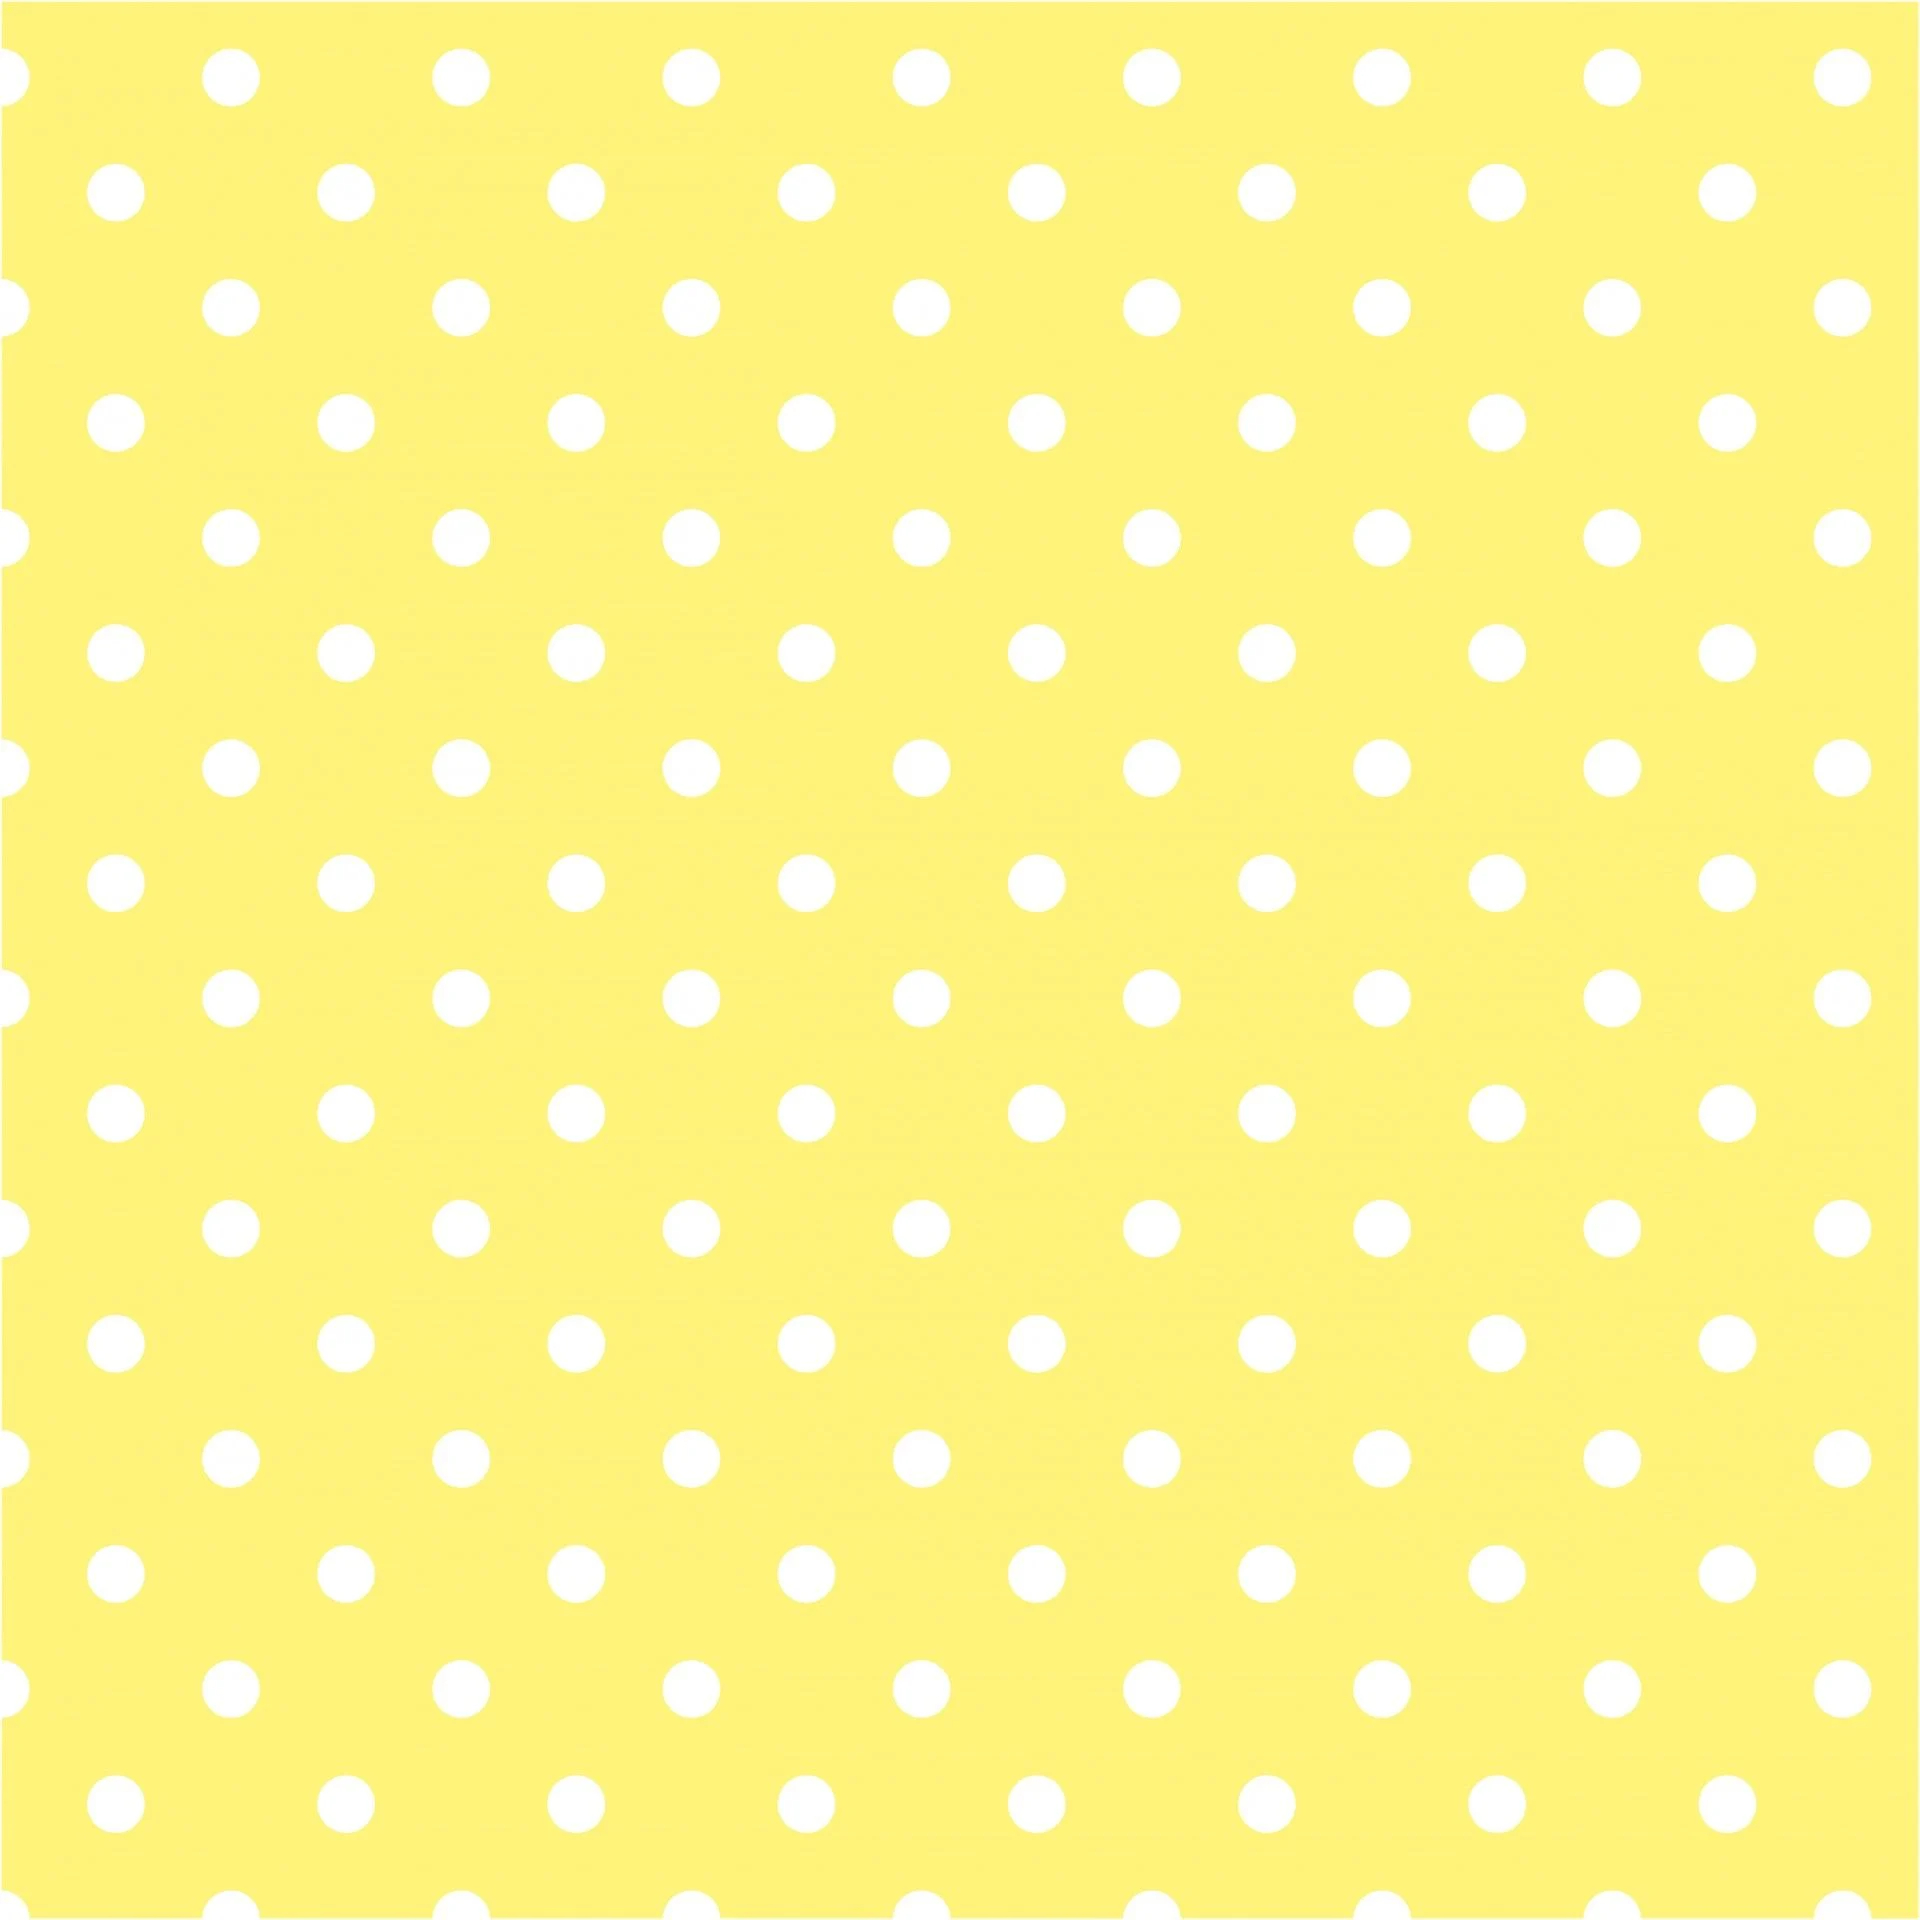 1920x1920 Yellow Polka Dot Wallpapers Top Free Yellow Polka Dot Backgrounds